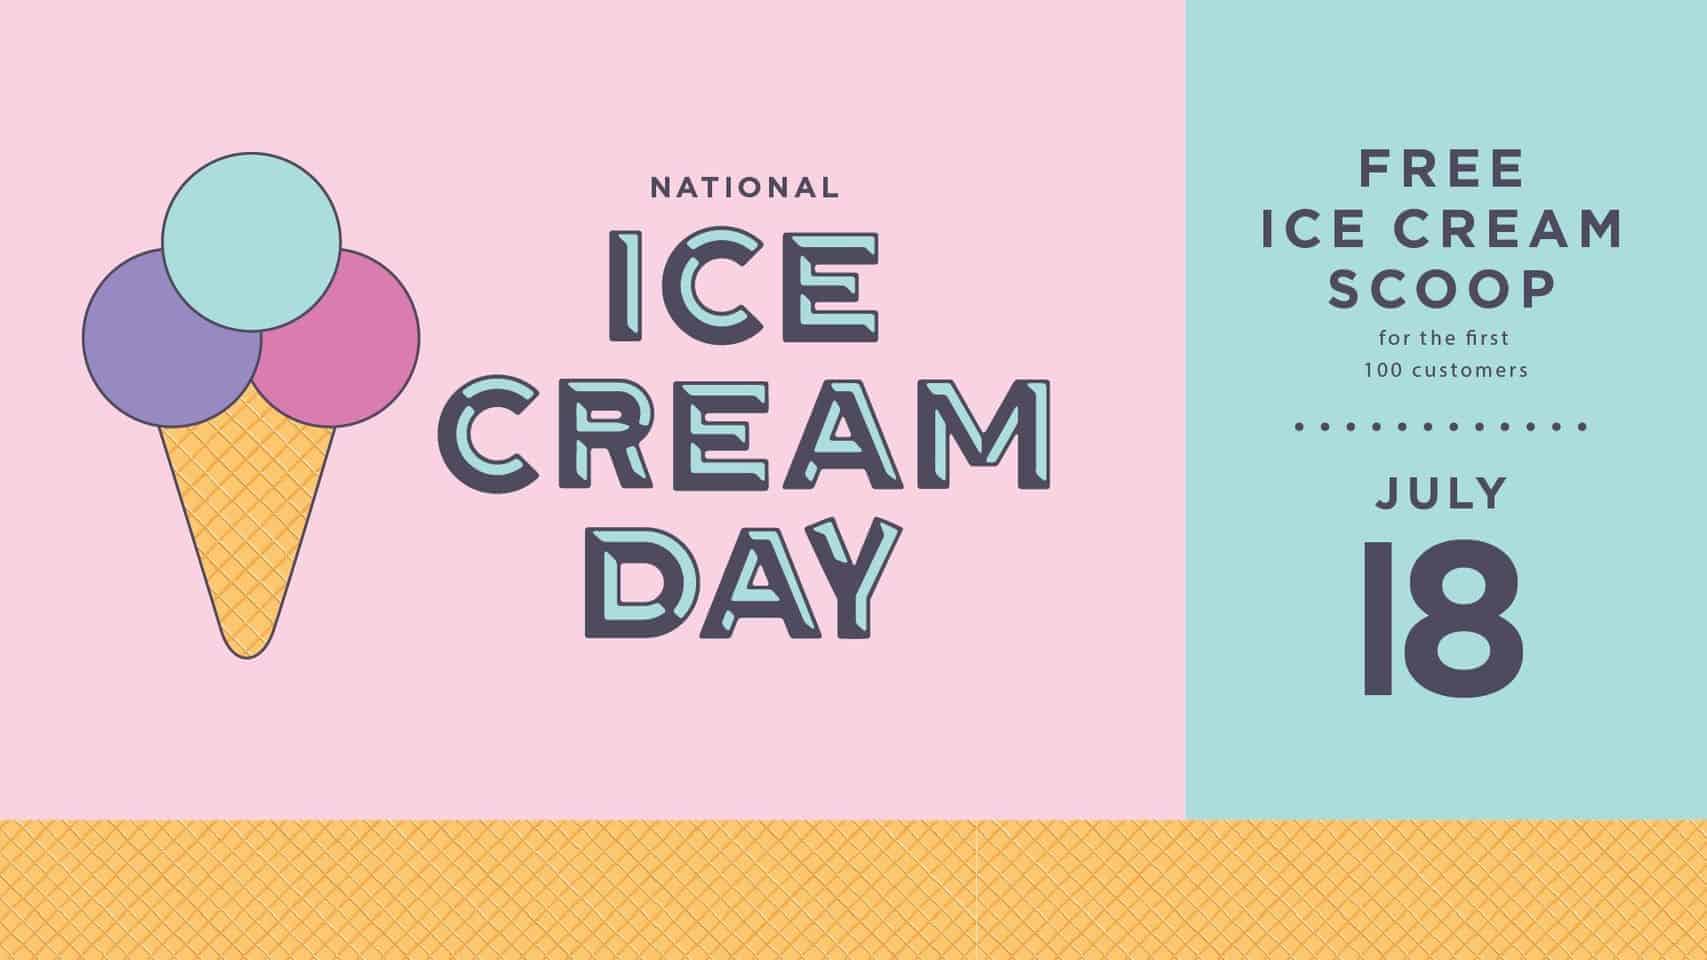 Downtown Palm Beach Gardens - National Ice Cream Day 2021